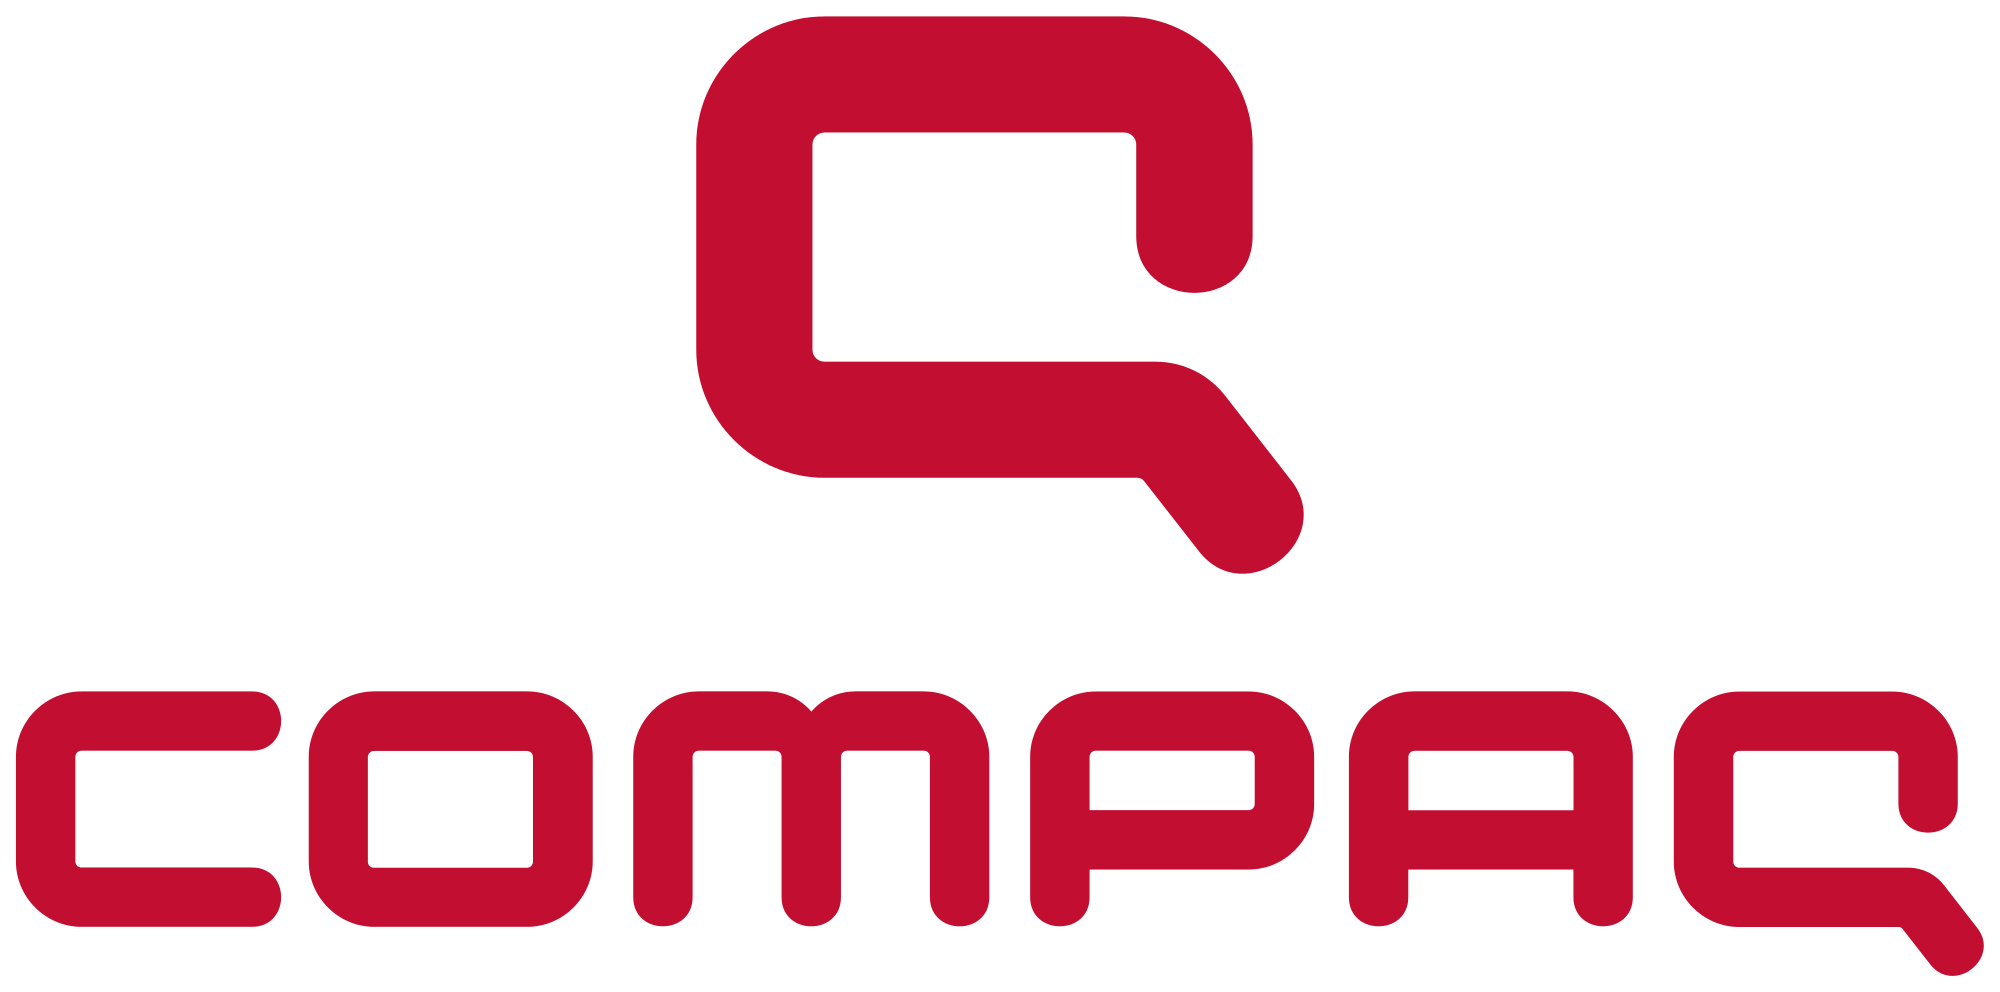 New Compaq Logo - Compaq logo new.svg